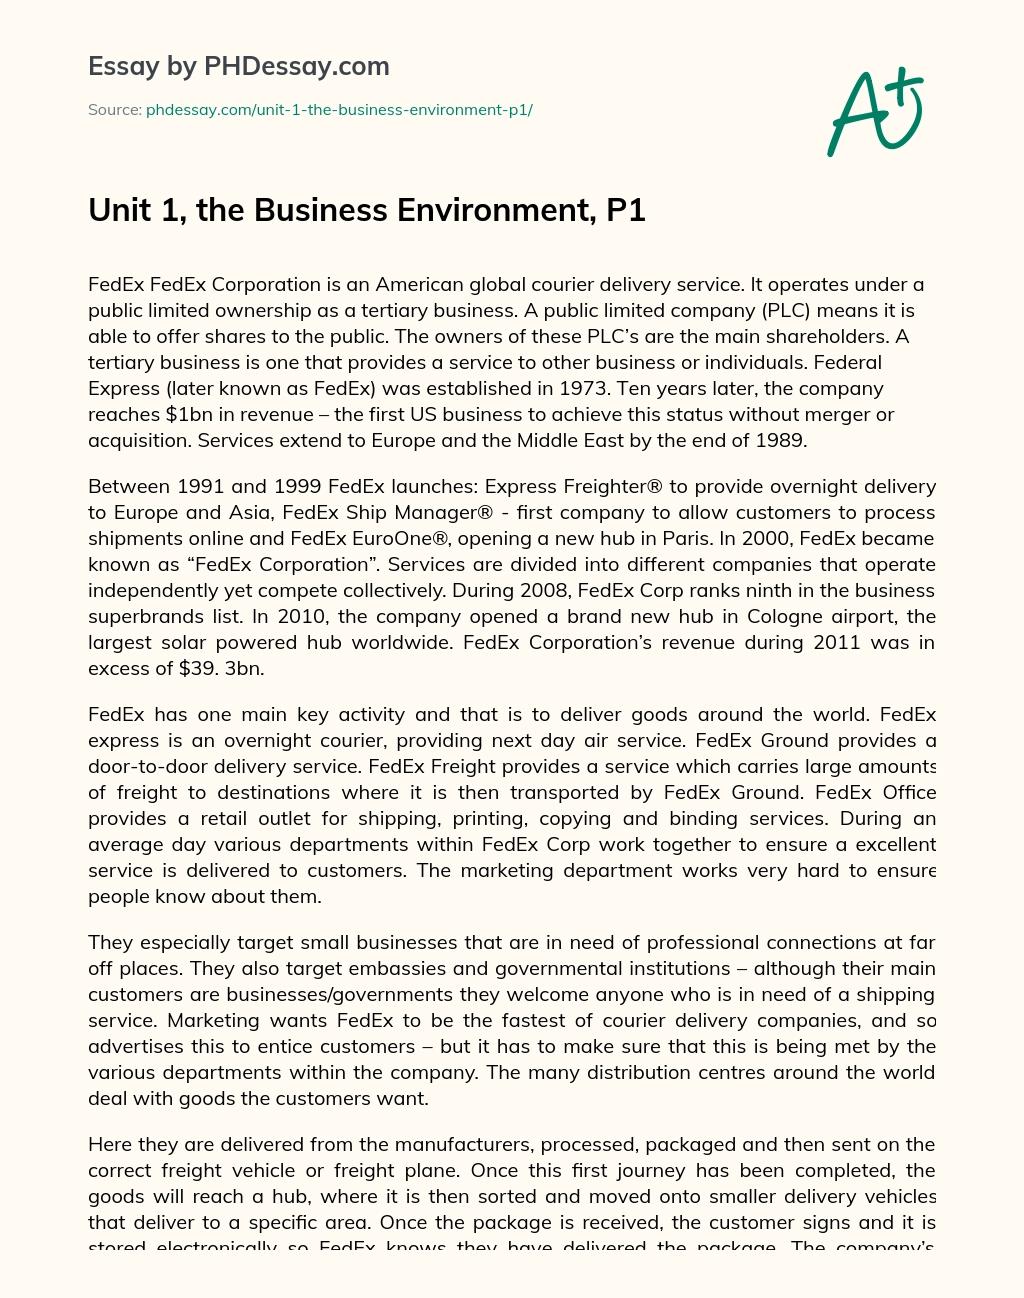 Unit 1, the Business Environment, P1 essay